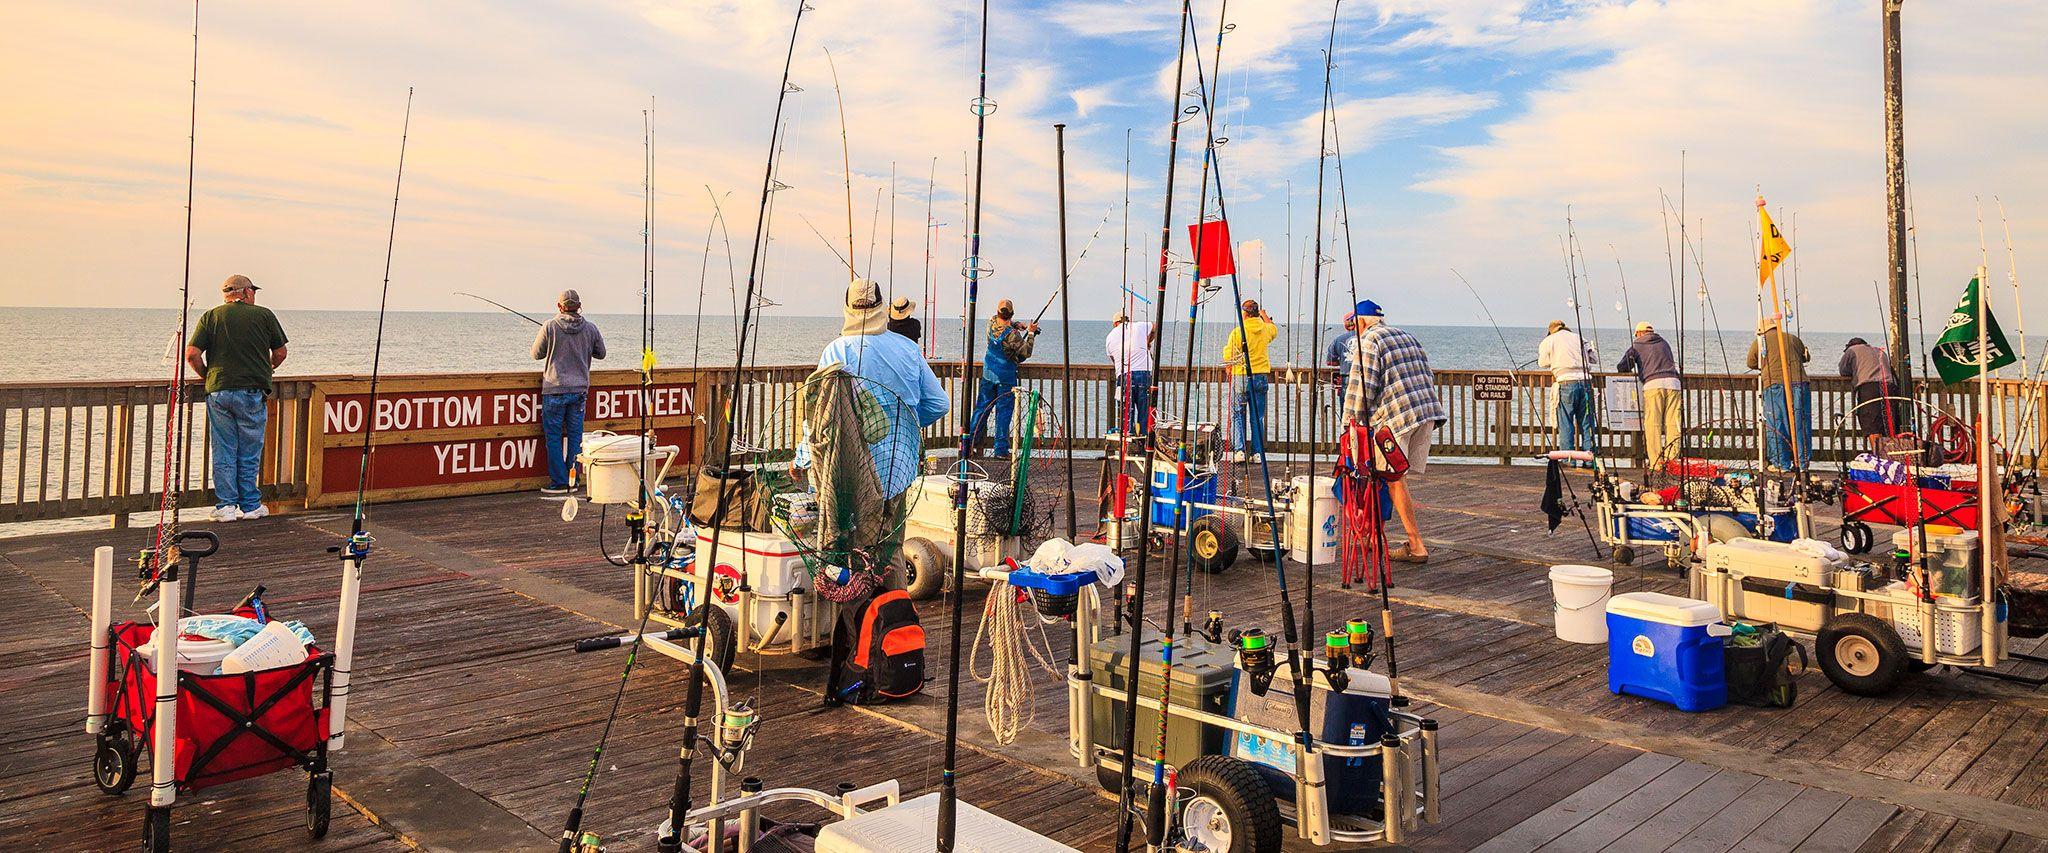 Pier fishing in the Gulf of Mexico Gulf Shores, AL